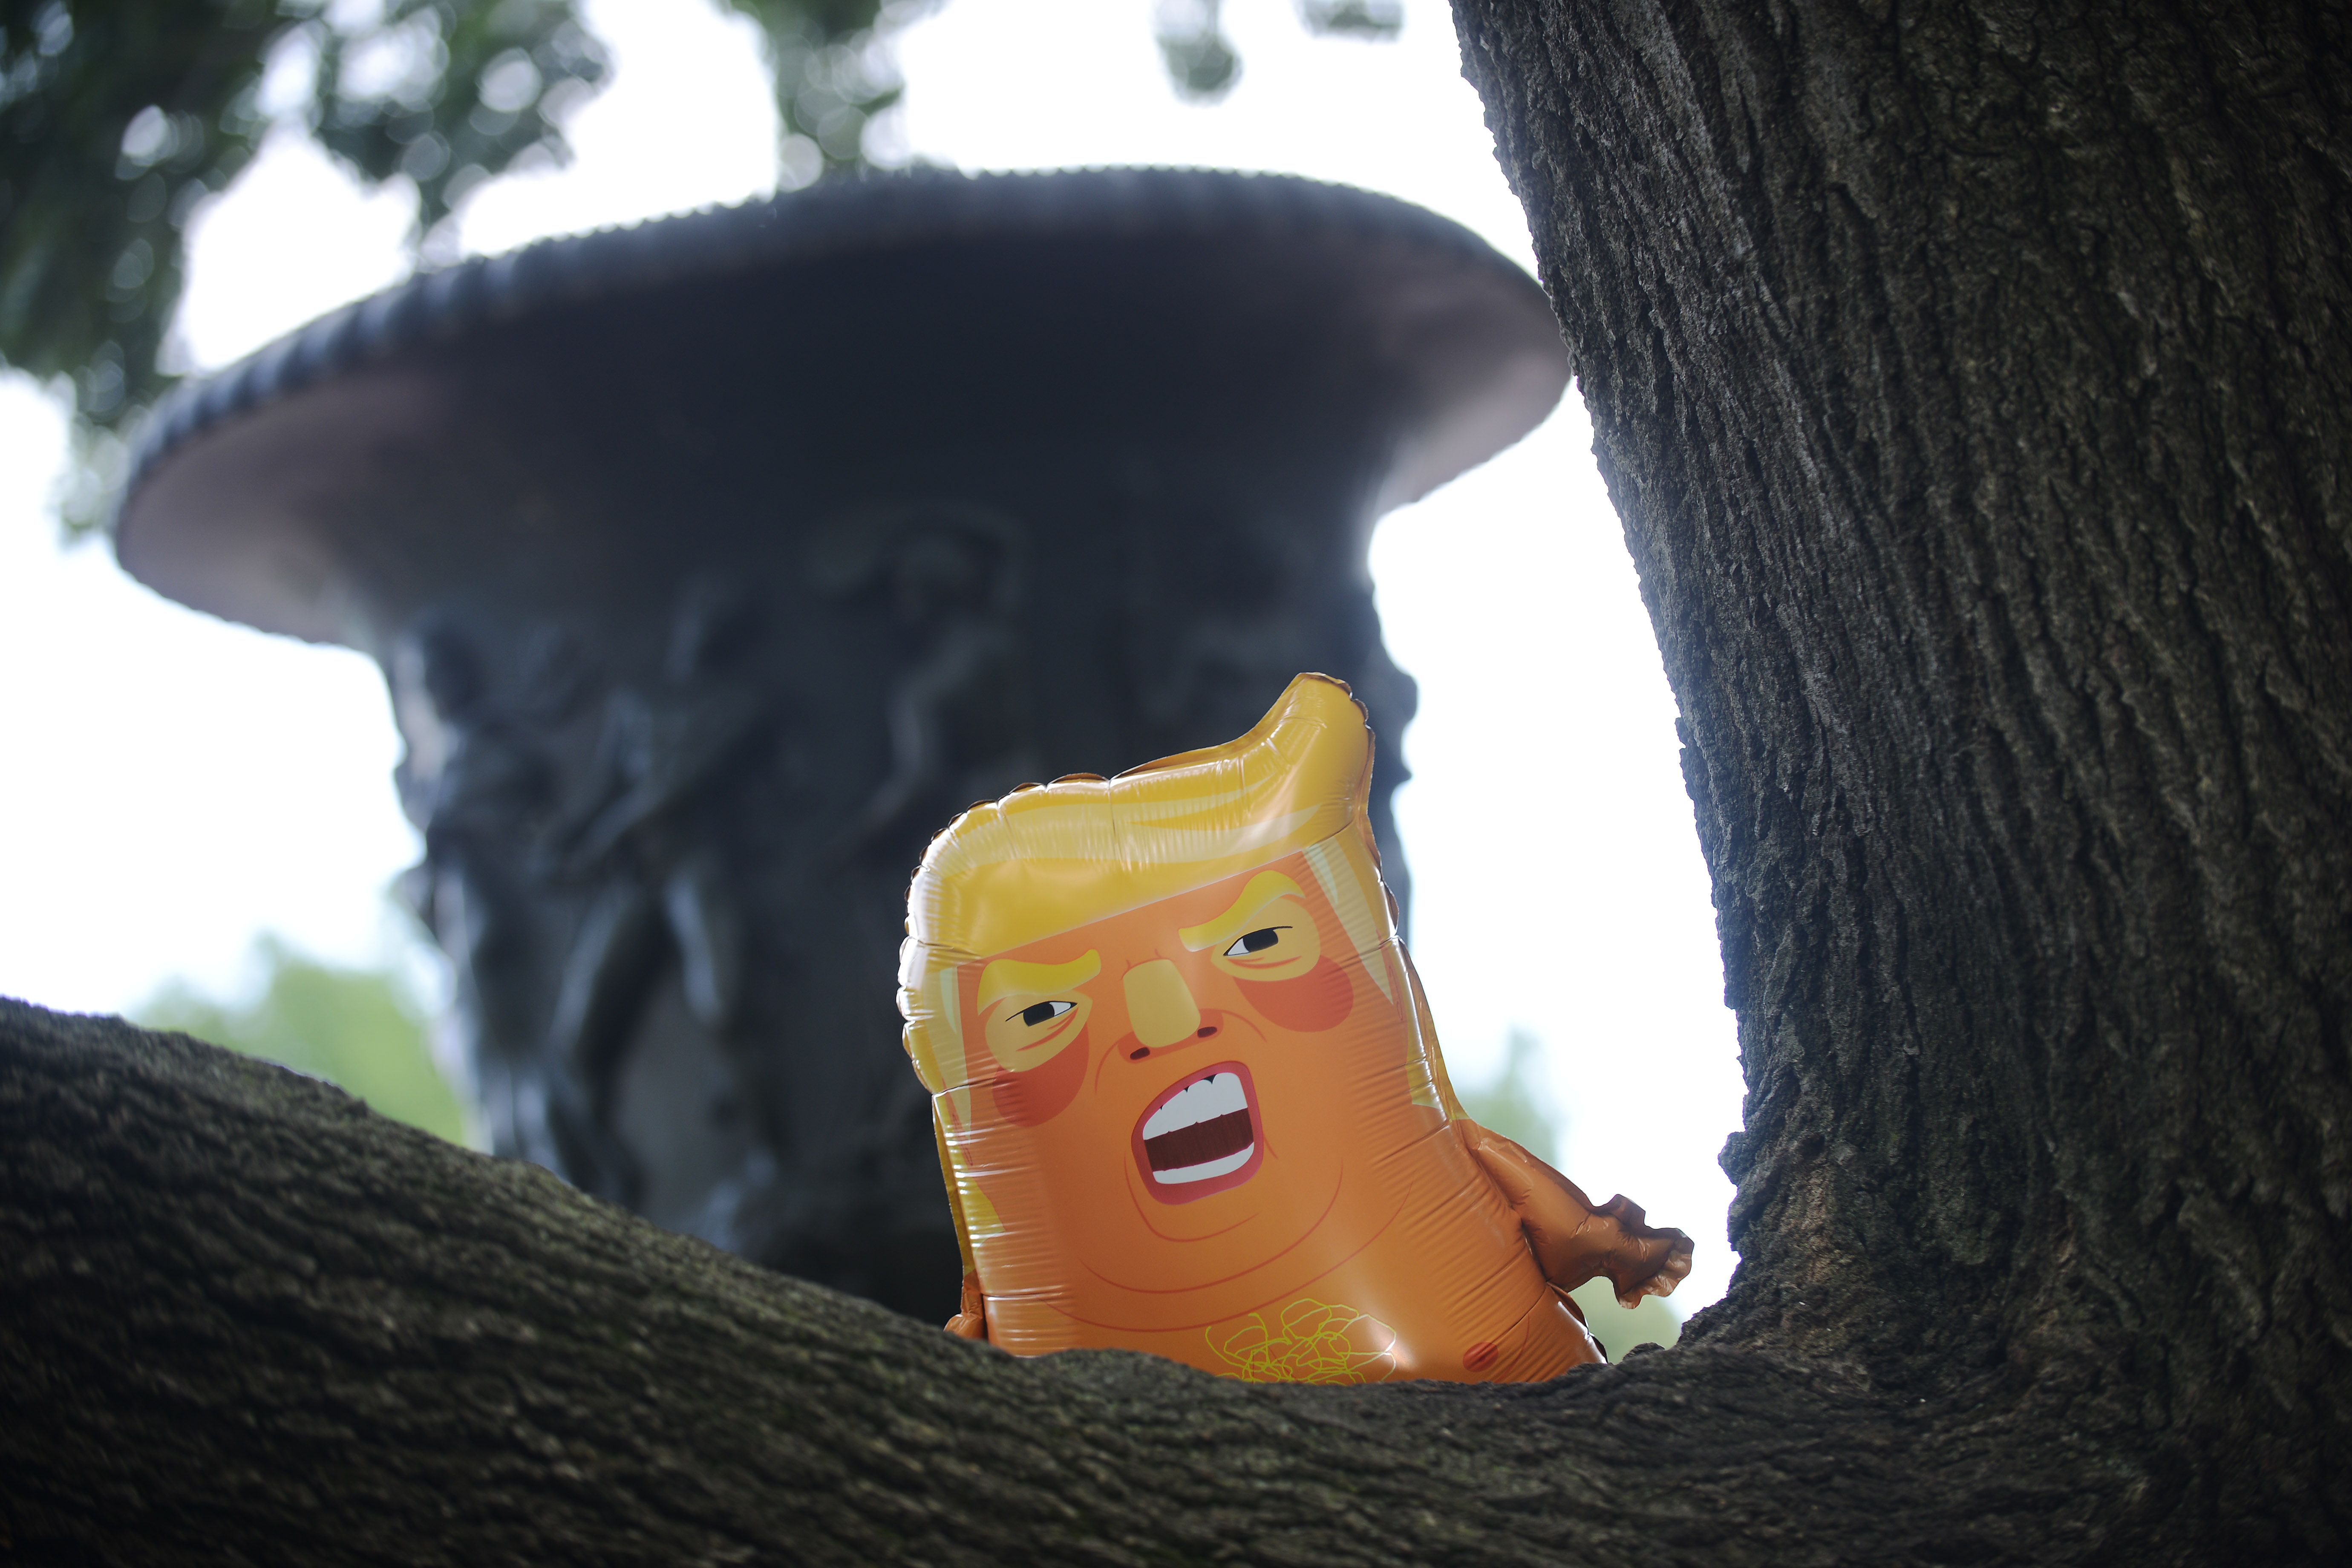 Peyton Sherwood's "trump baby balloon" near the White House in Washington, D.C.